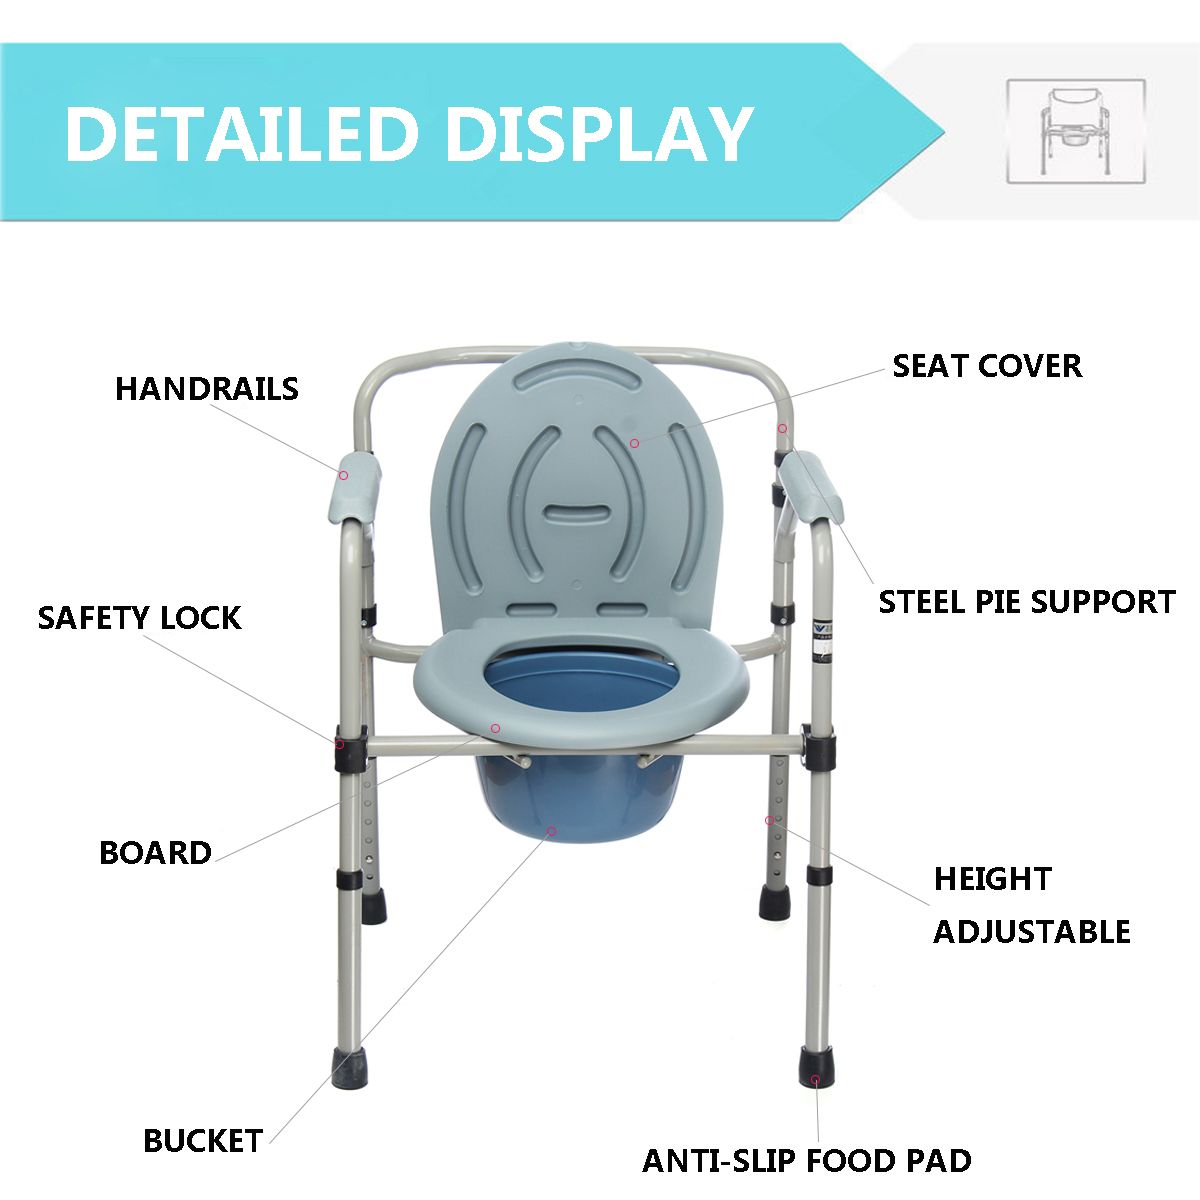 Folding-Commode-Seat-Portable-Medical-Toilet-Chair-StoolFor-Senior-Adults-Handicap-Elder-1553702